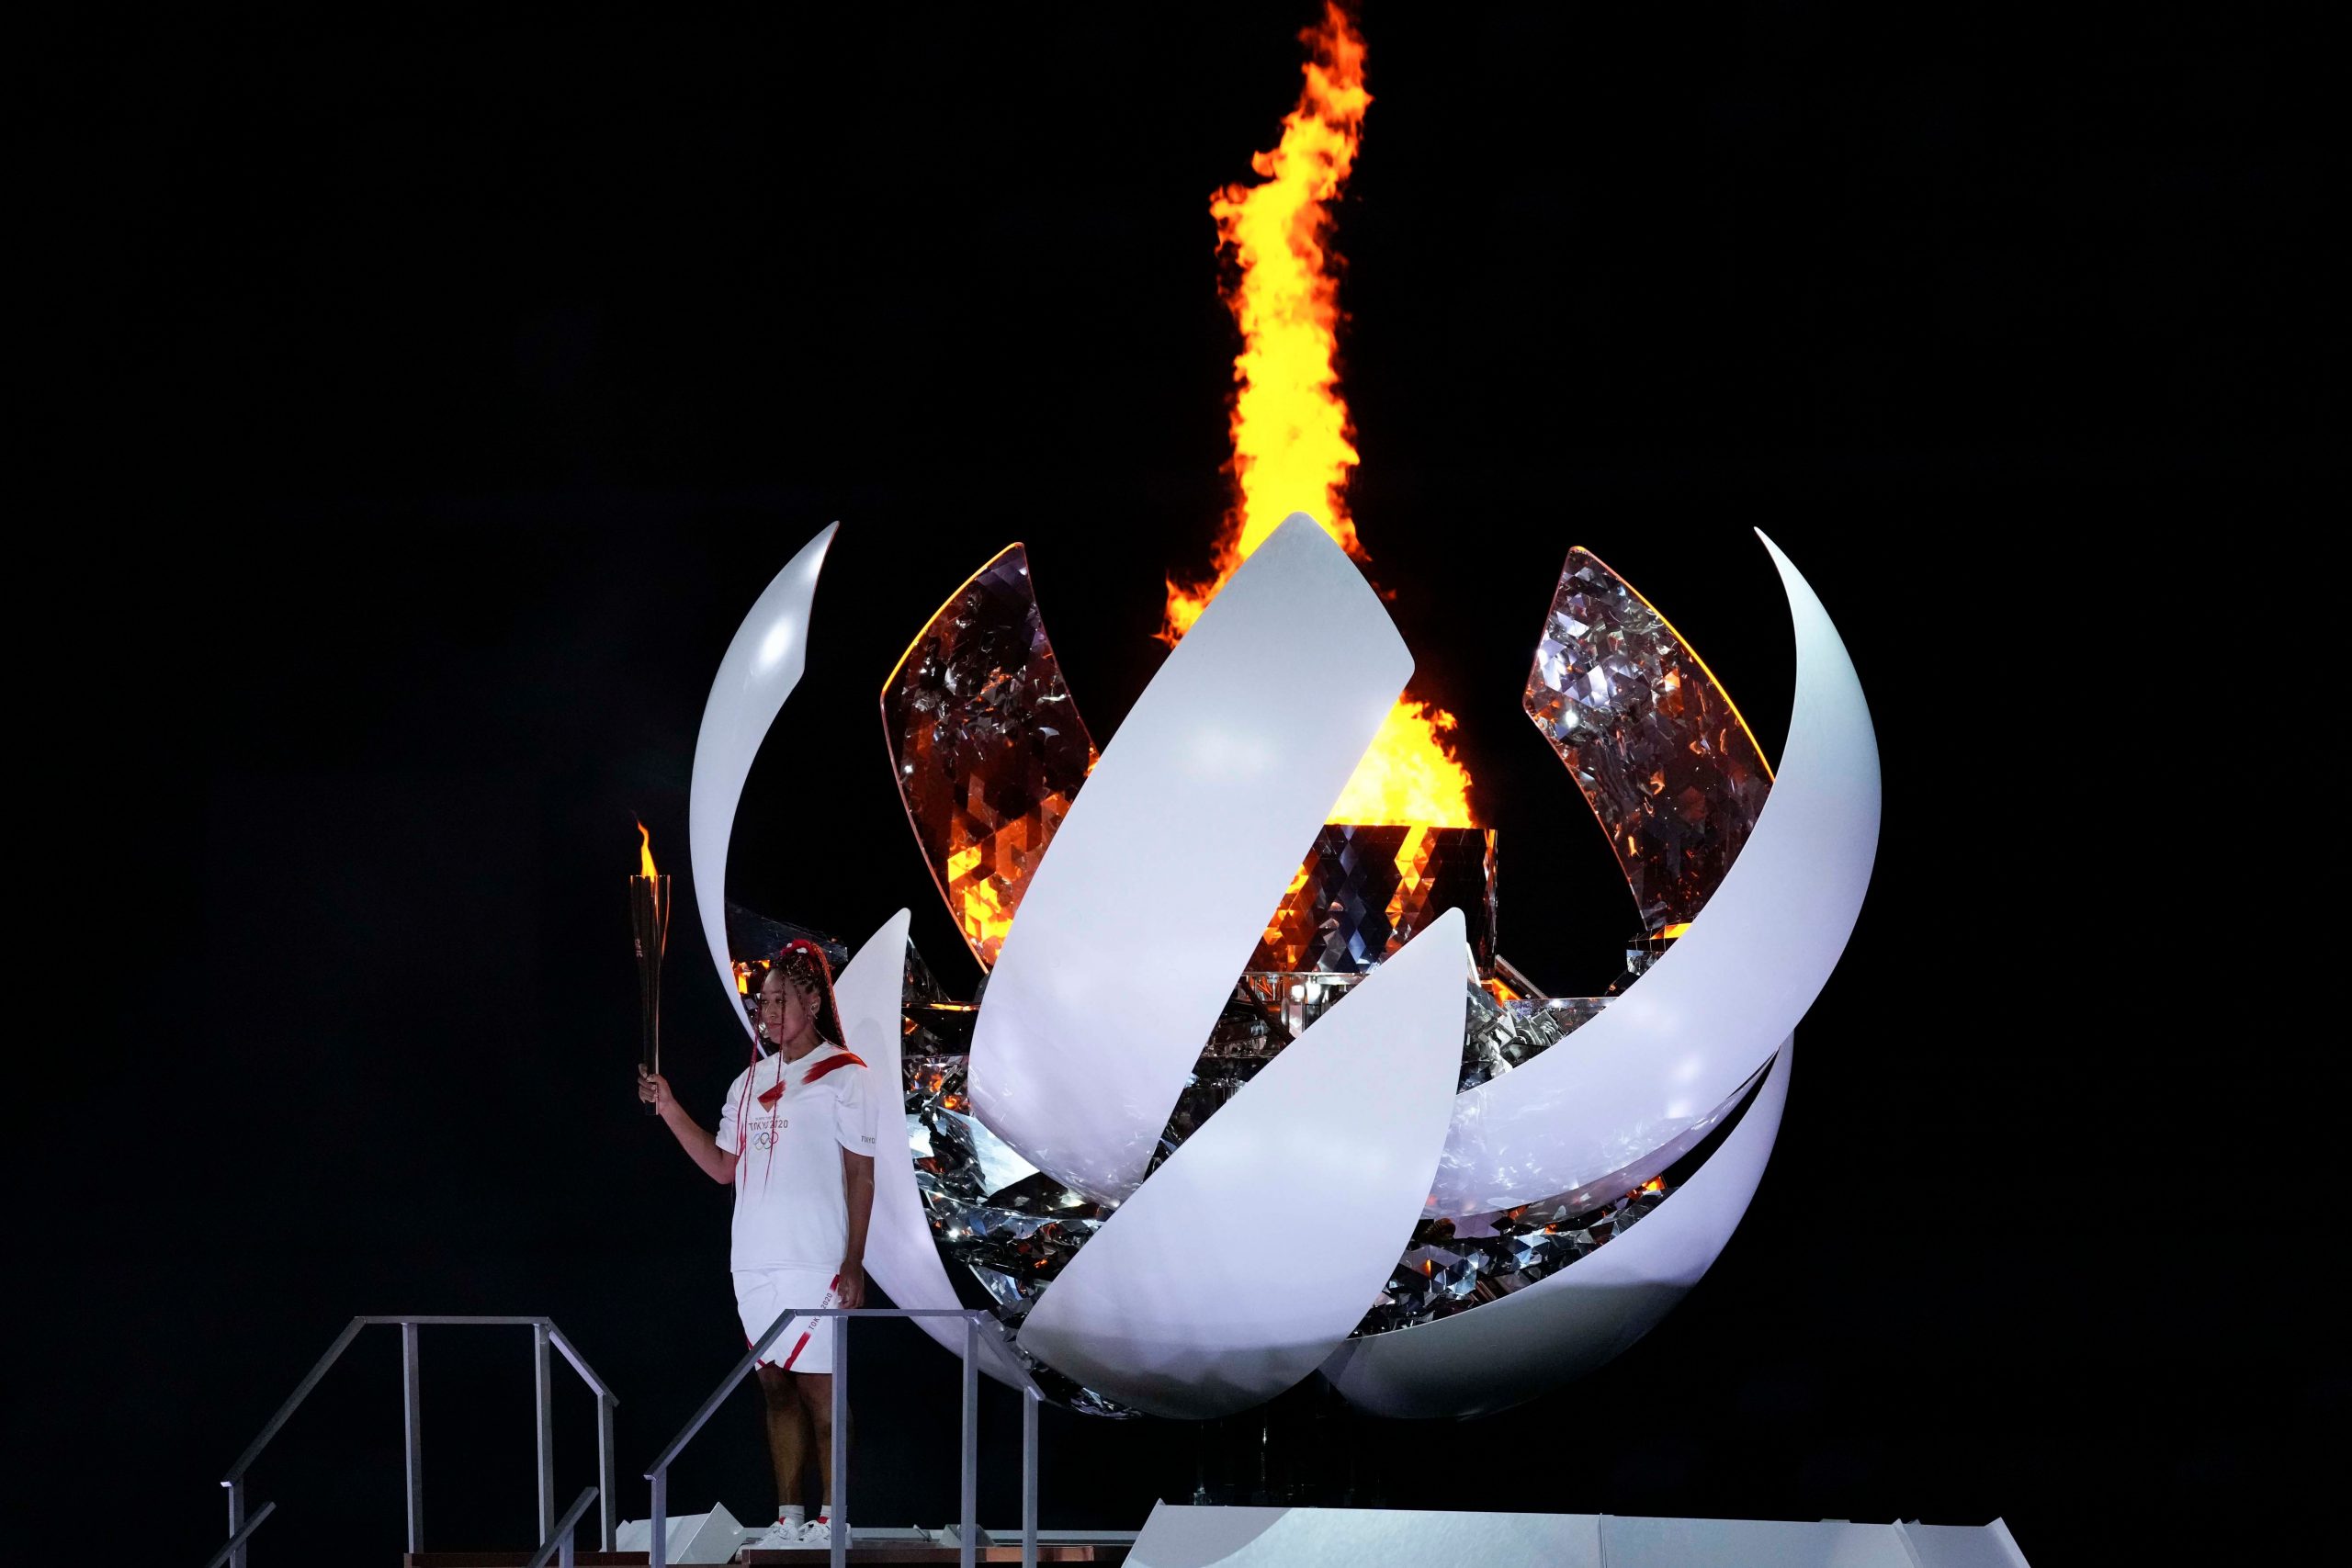 Naomi Osaka in Olympic spotlight, but biracial Japanese face struggles